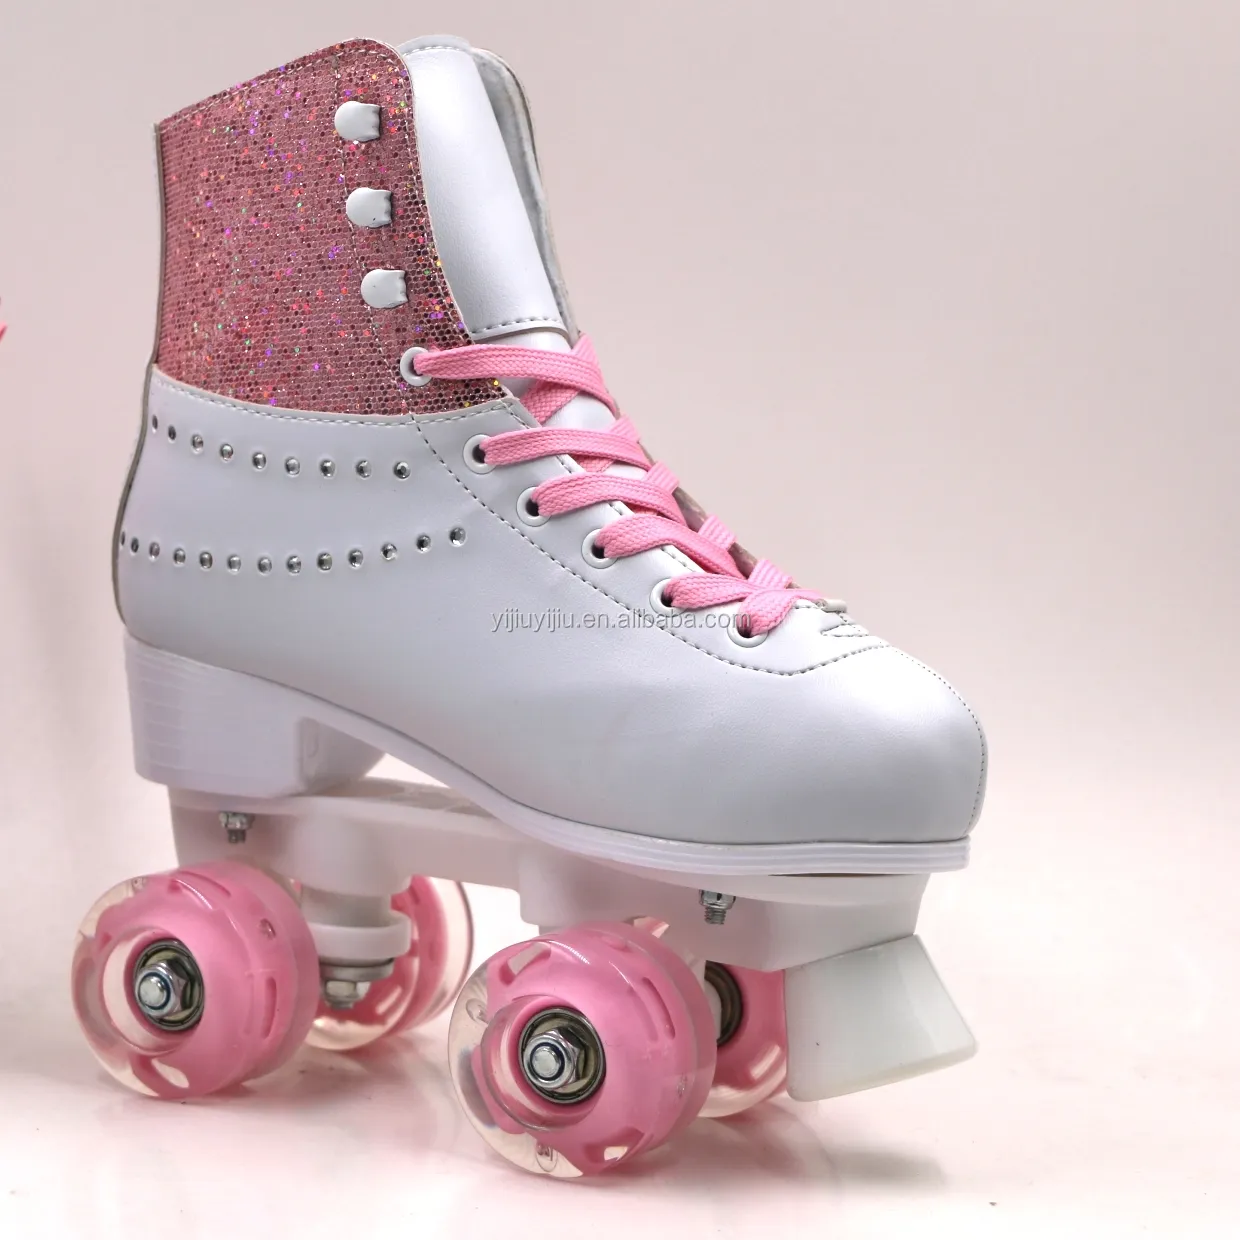 Yijiu Vier 4 Professionele Verstelbare Rolschaatsen Strap On Skate Zweefvliegtuig Voor Volwassen Skate Schoenen